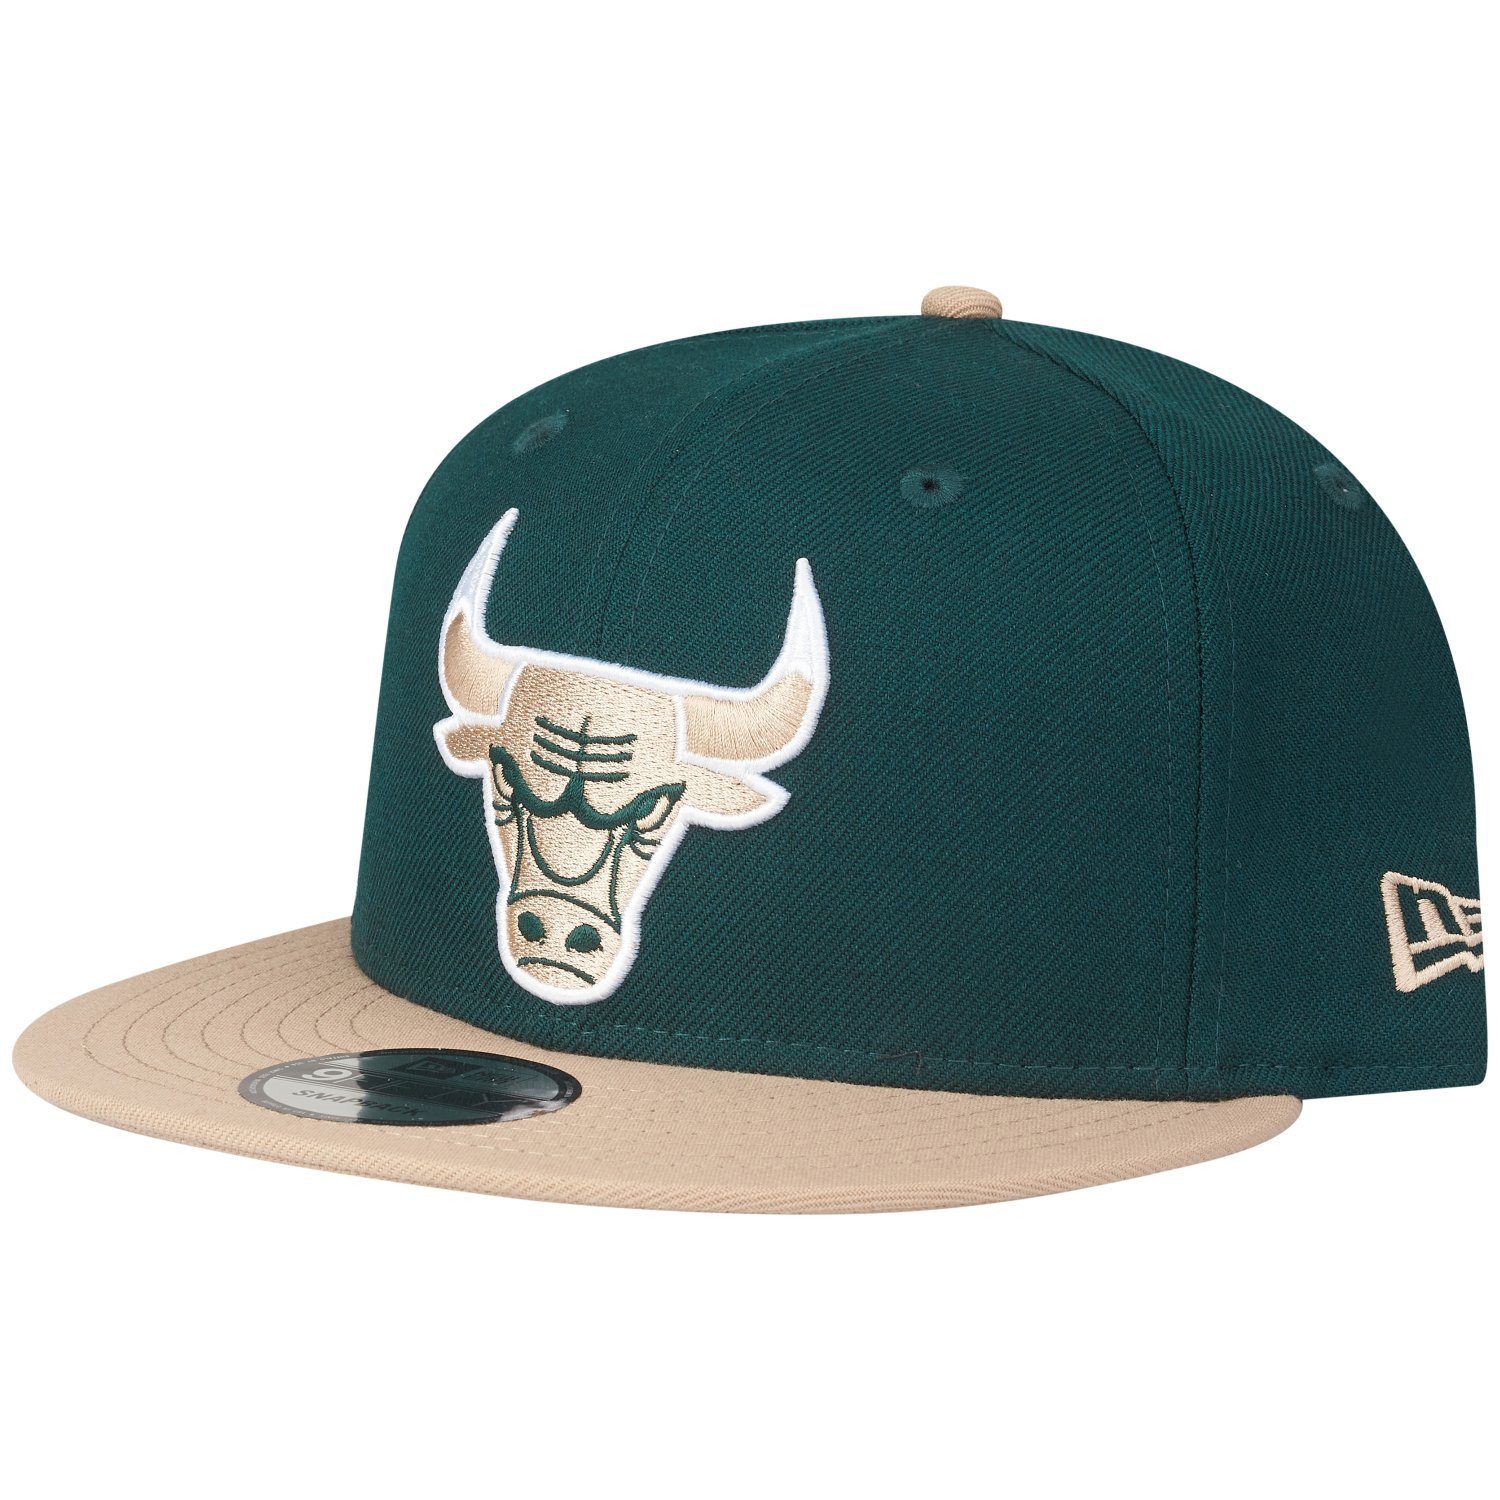 New Era Snapback Cap 9Fifty Chicago Bulls green